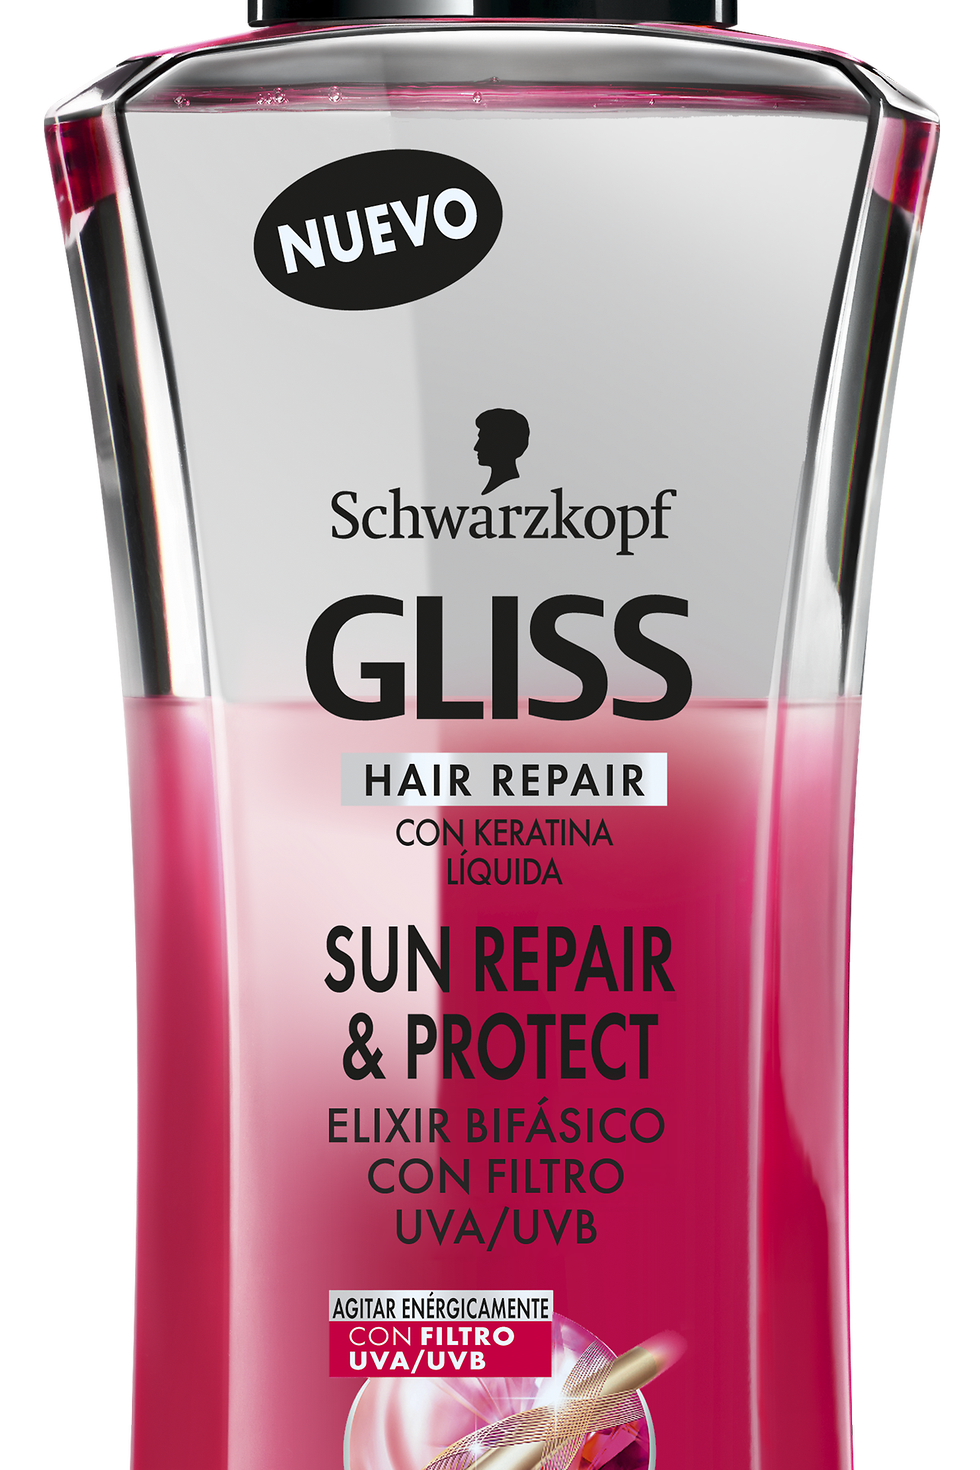 Gliss Sun Repair & Protect Spray